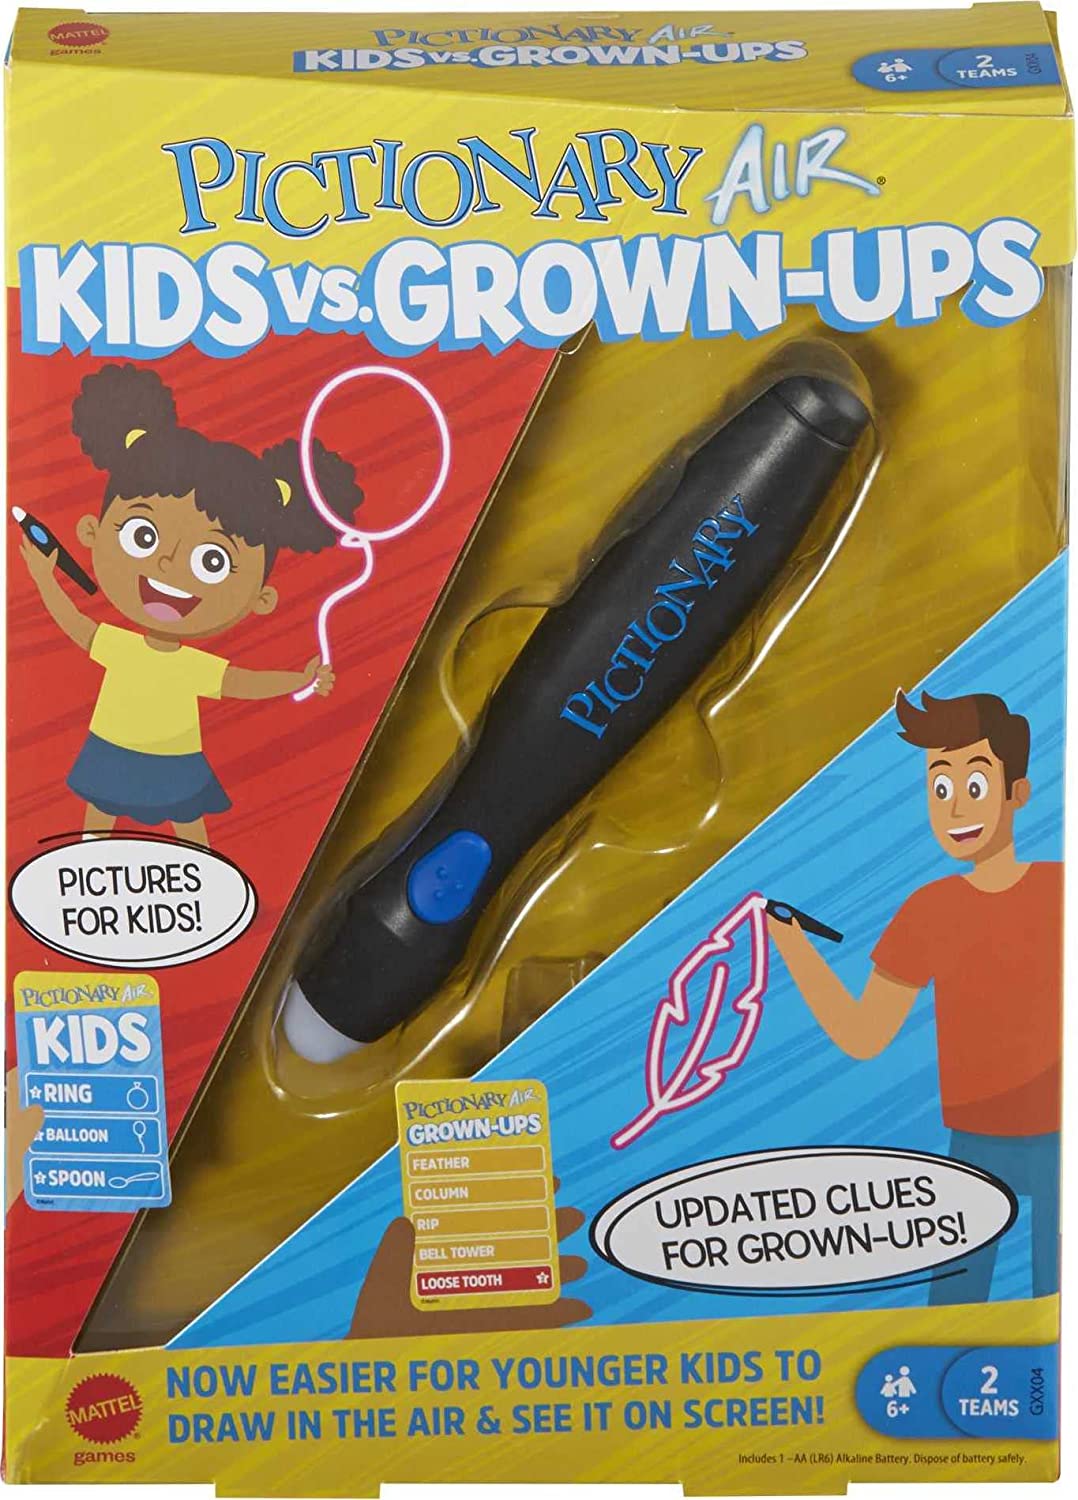 Pictionary Air Kids Vs Grown-Ups by Mattel